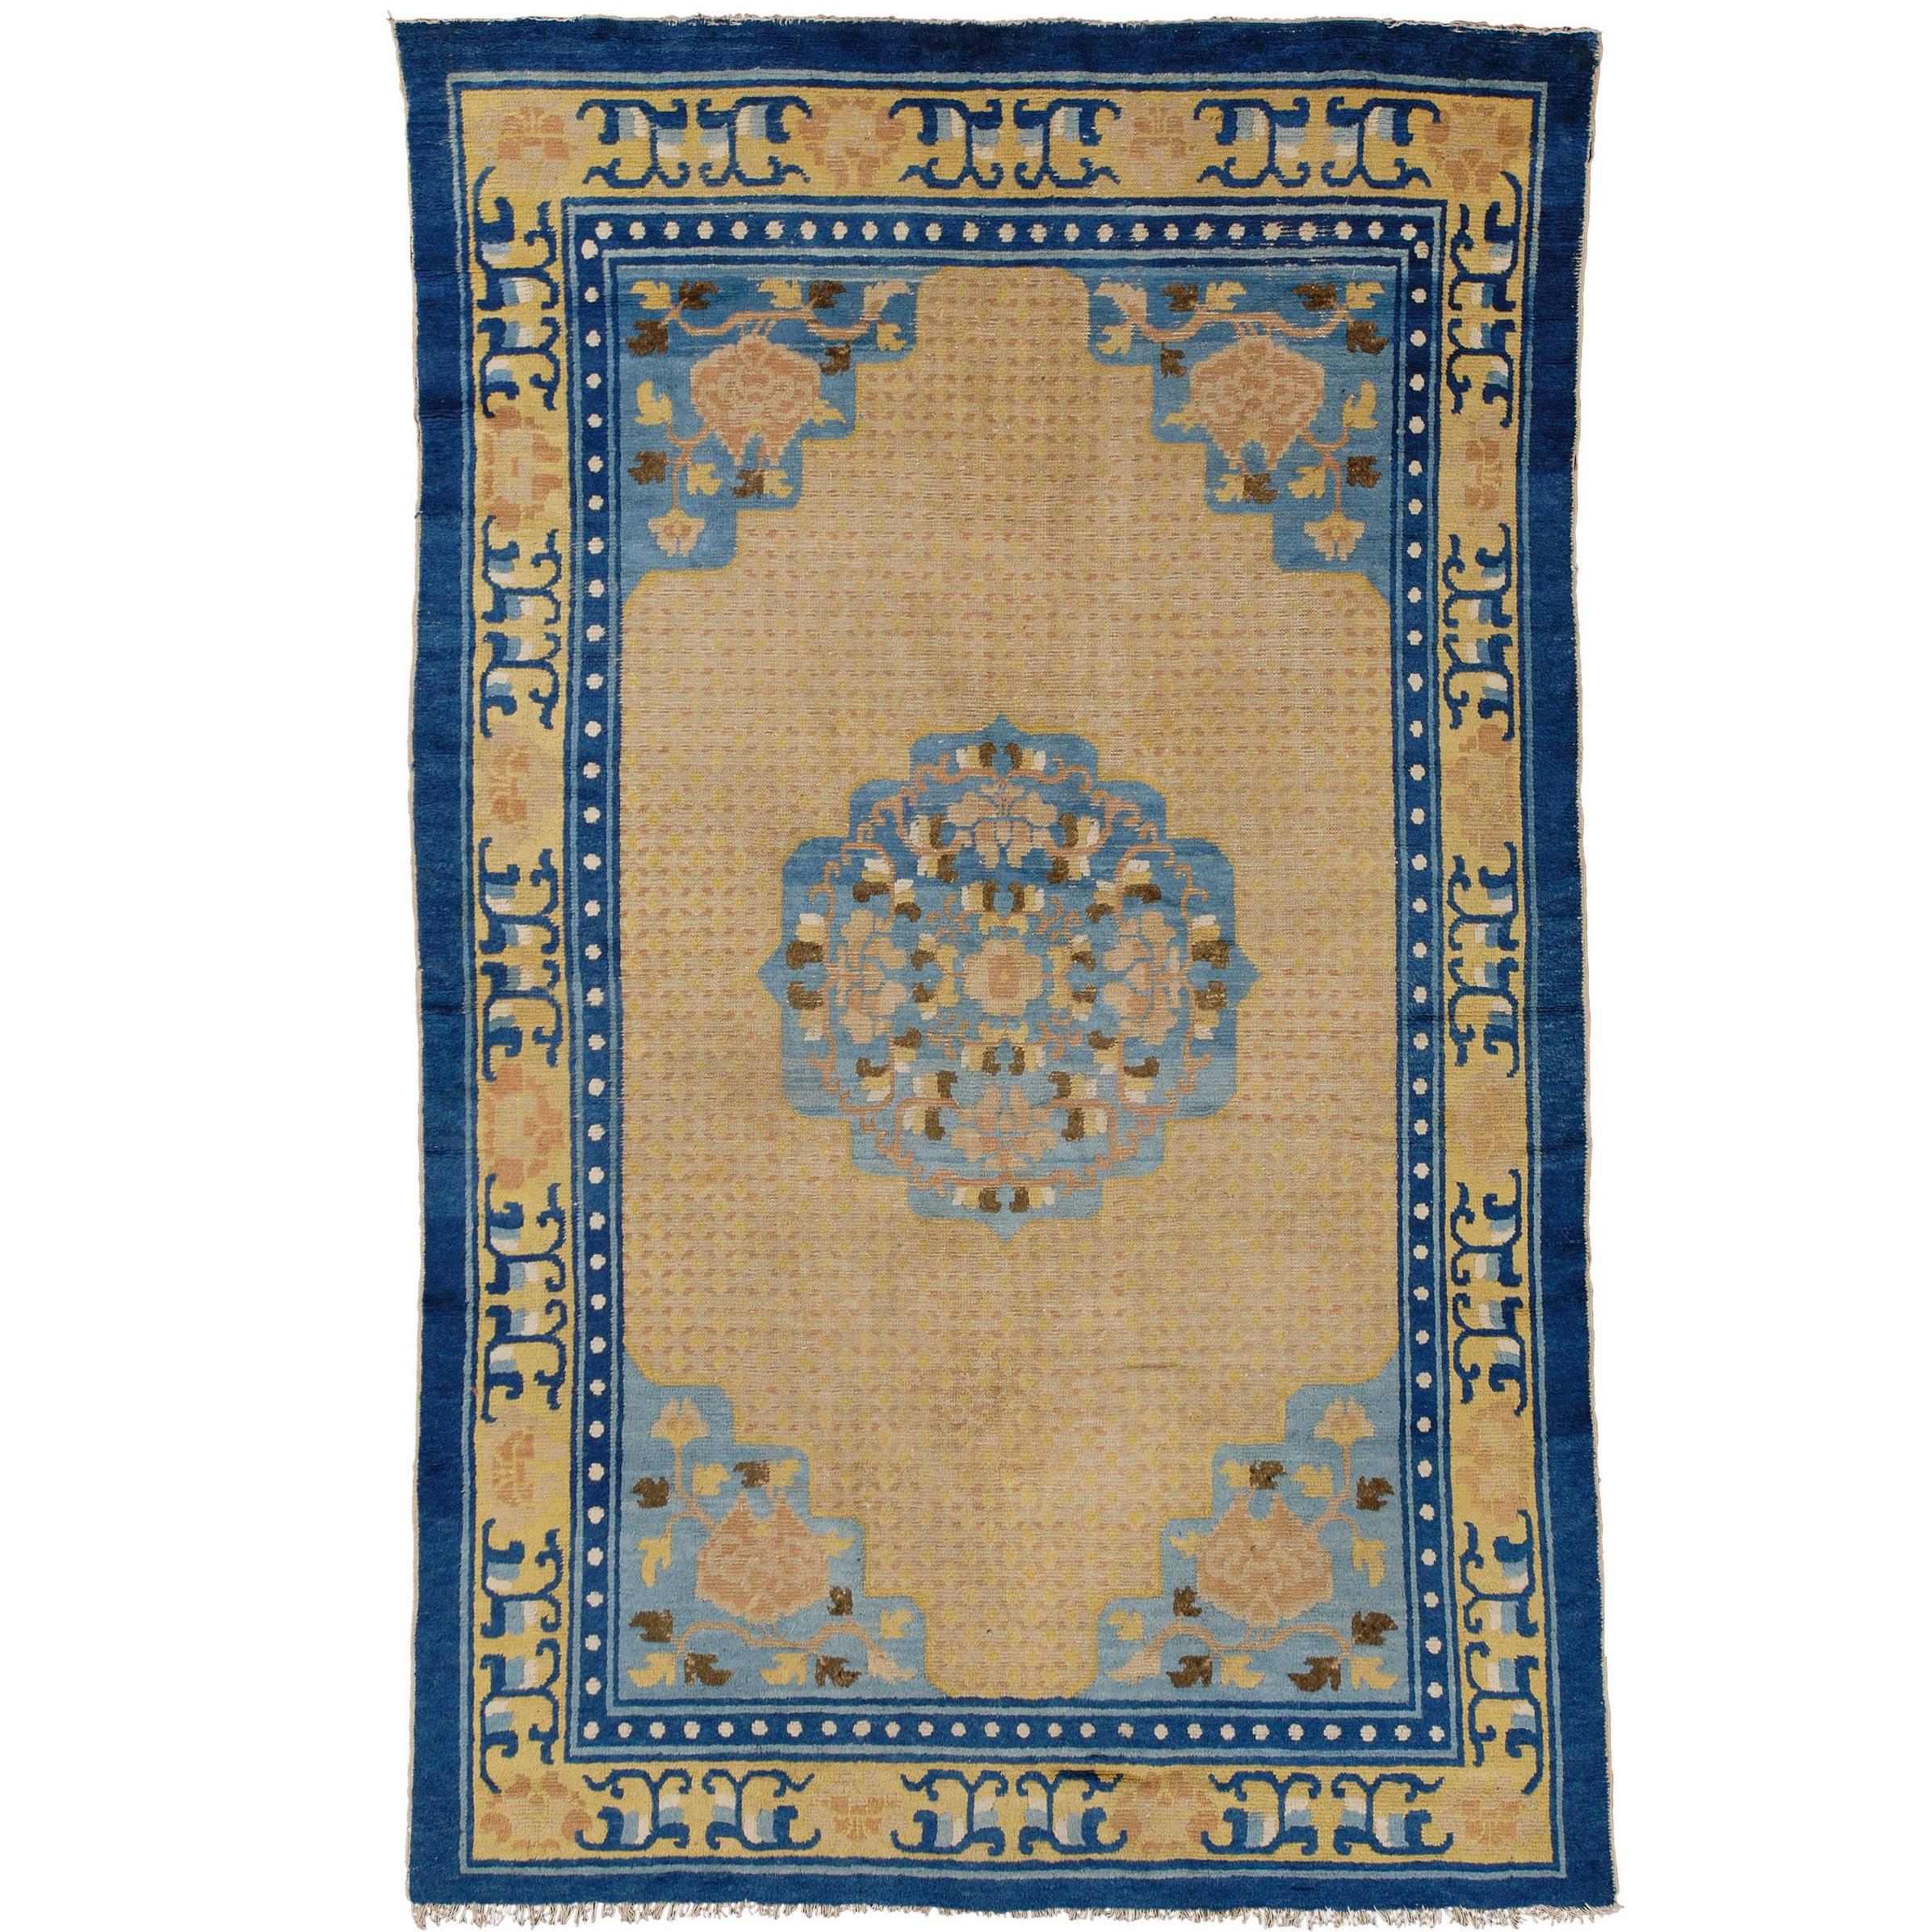 Early 19th Century Ning Xia Carpet